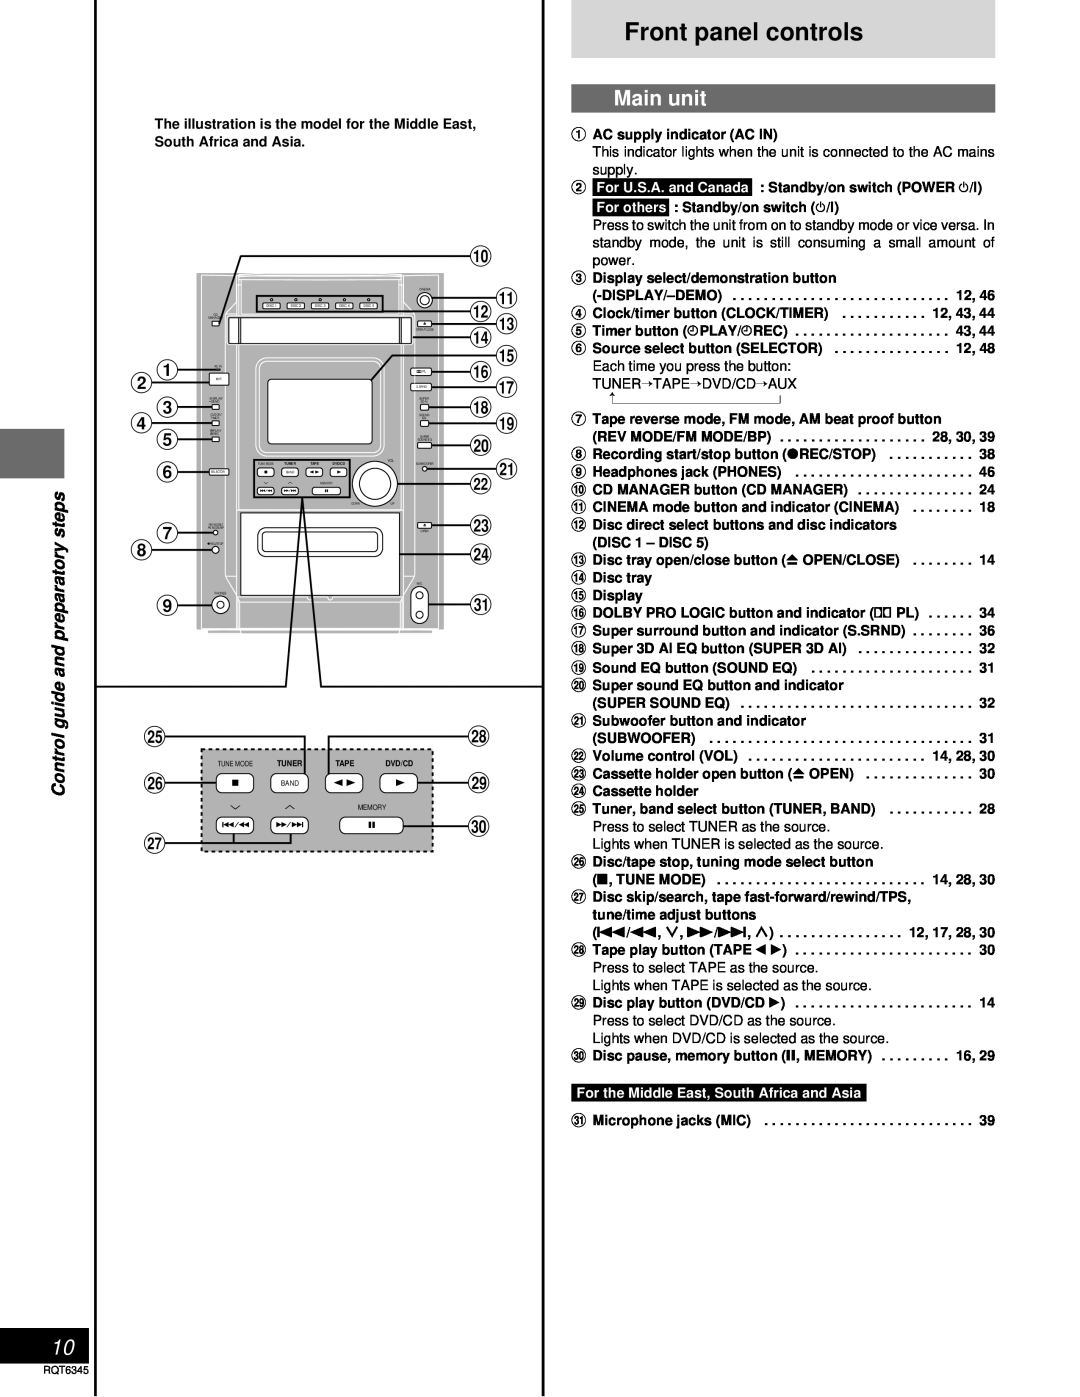 Panasonic SC-DK20 warranty Front panel controls, Main unit 